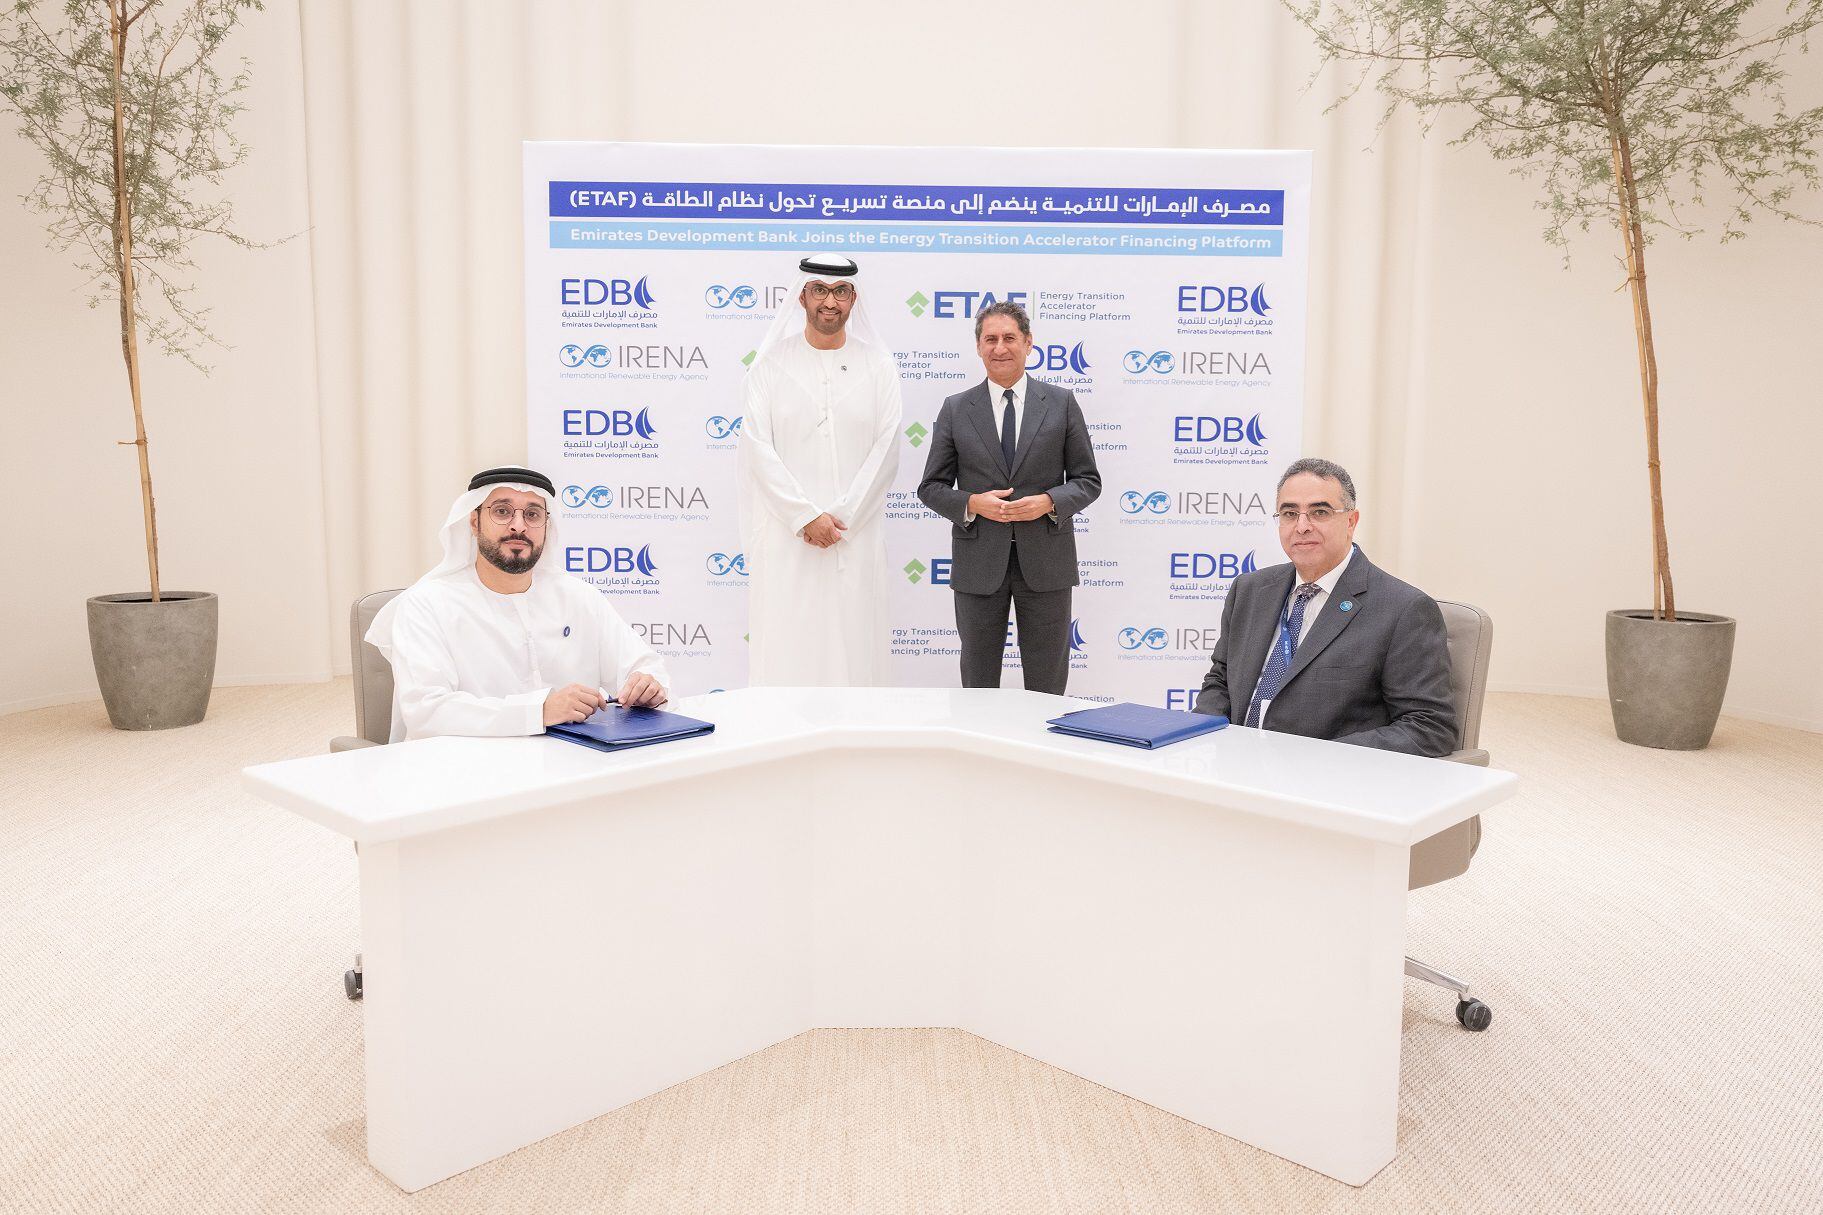 edb to provide $350m to irena’s energy transition financing platform